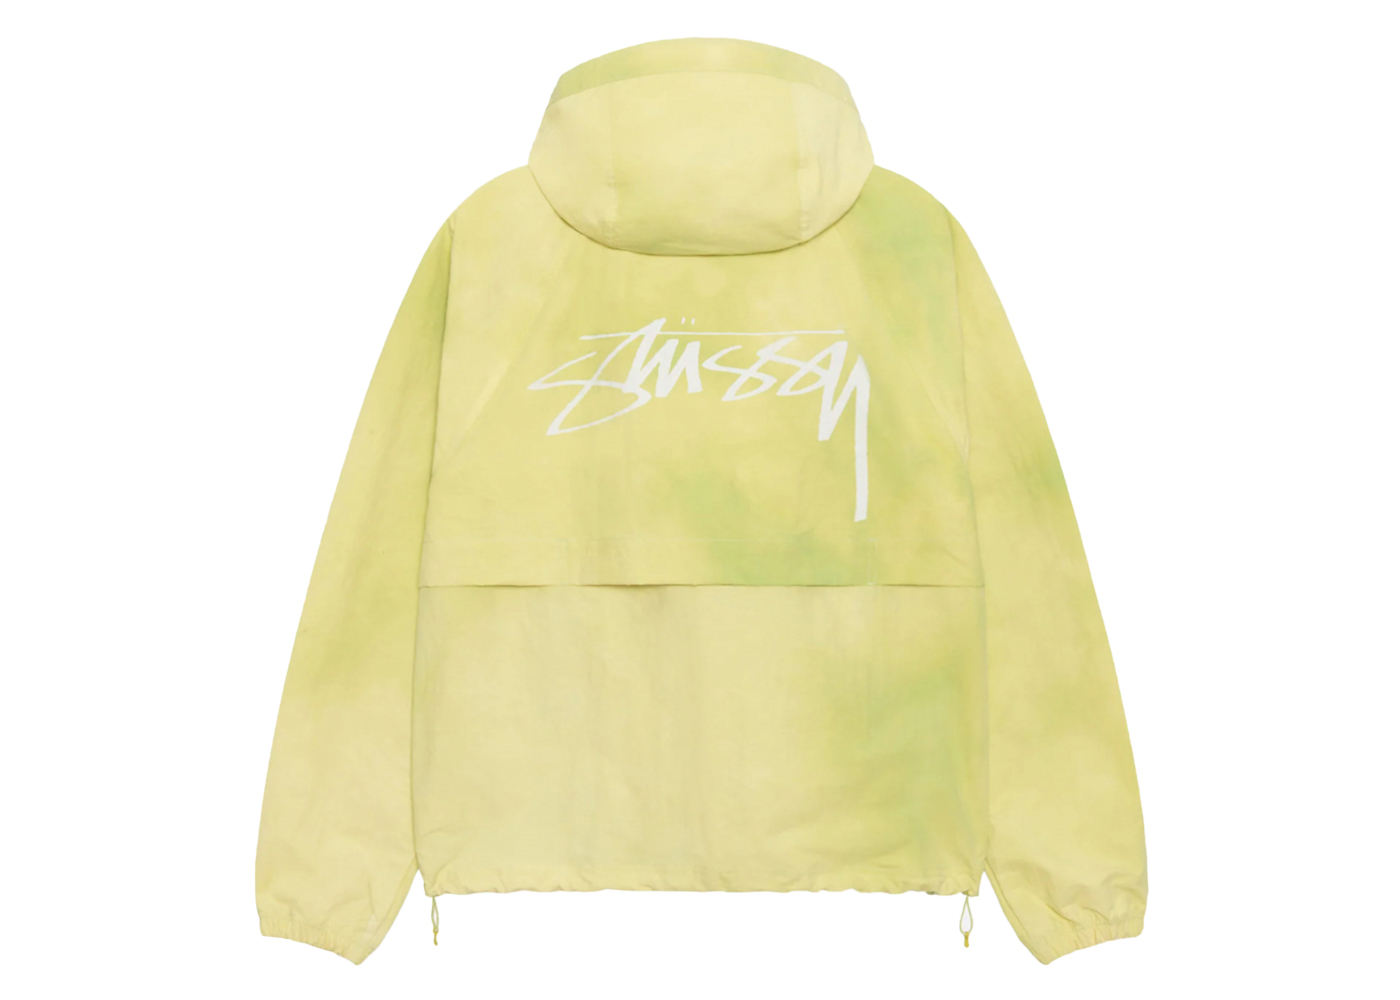 Stussy Beach Shell Wave Dye Hooded Sweatshirt Lime